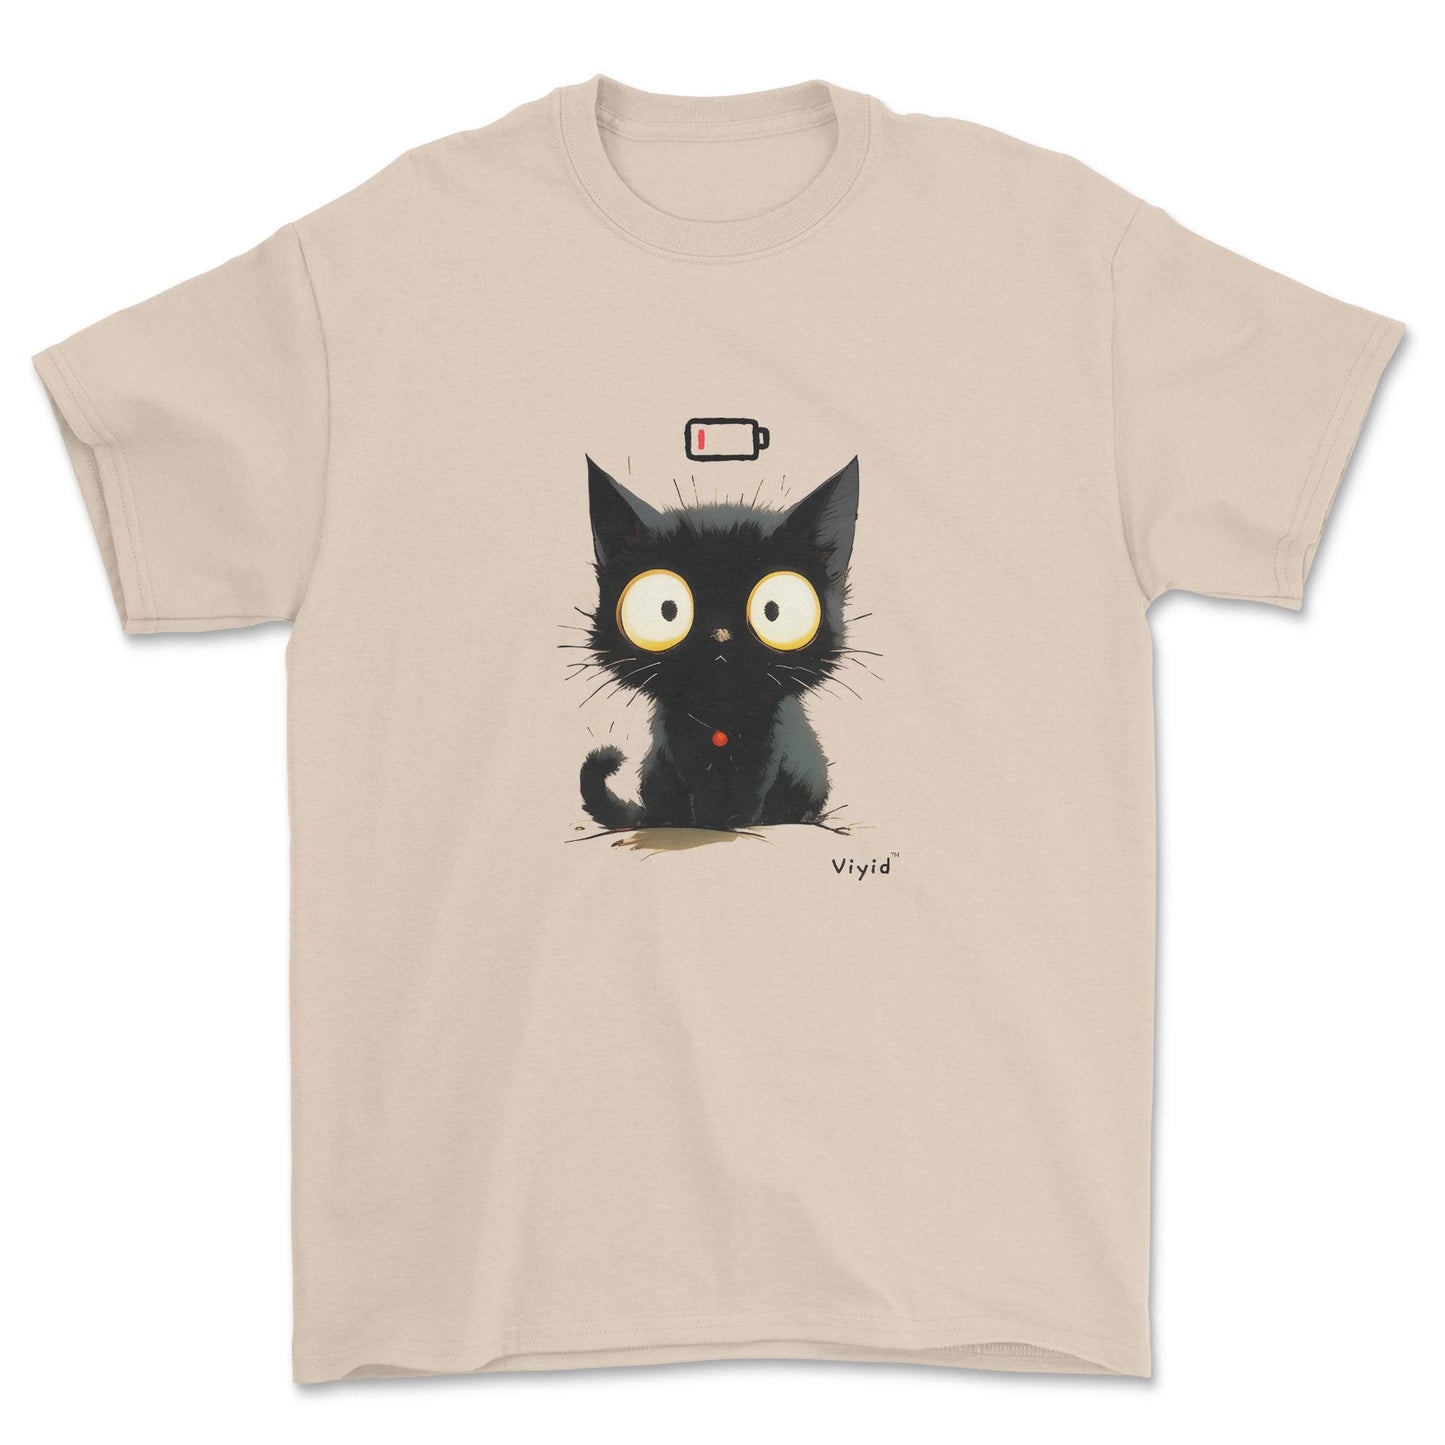 Low battery black cat adult t-shirt sand